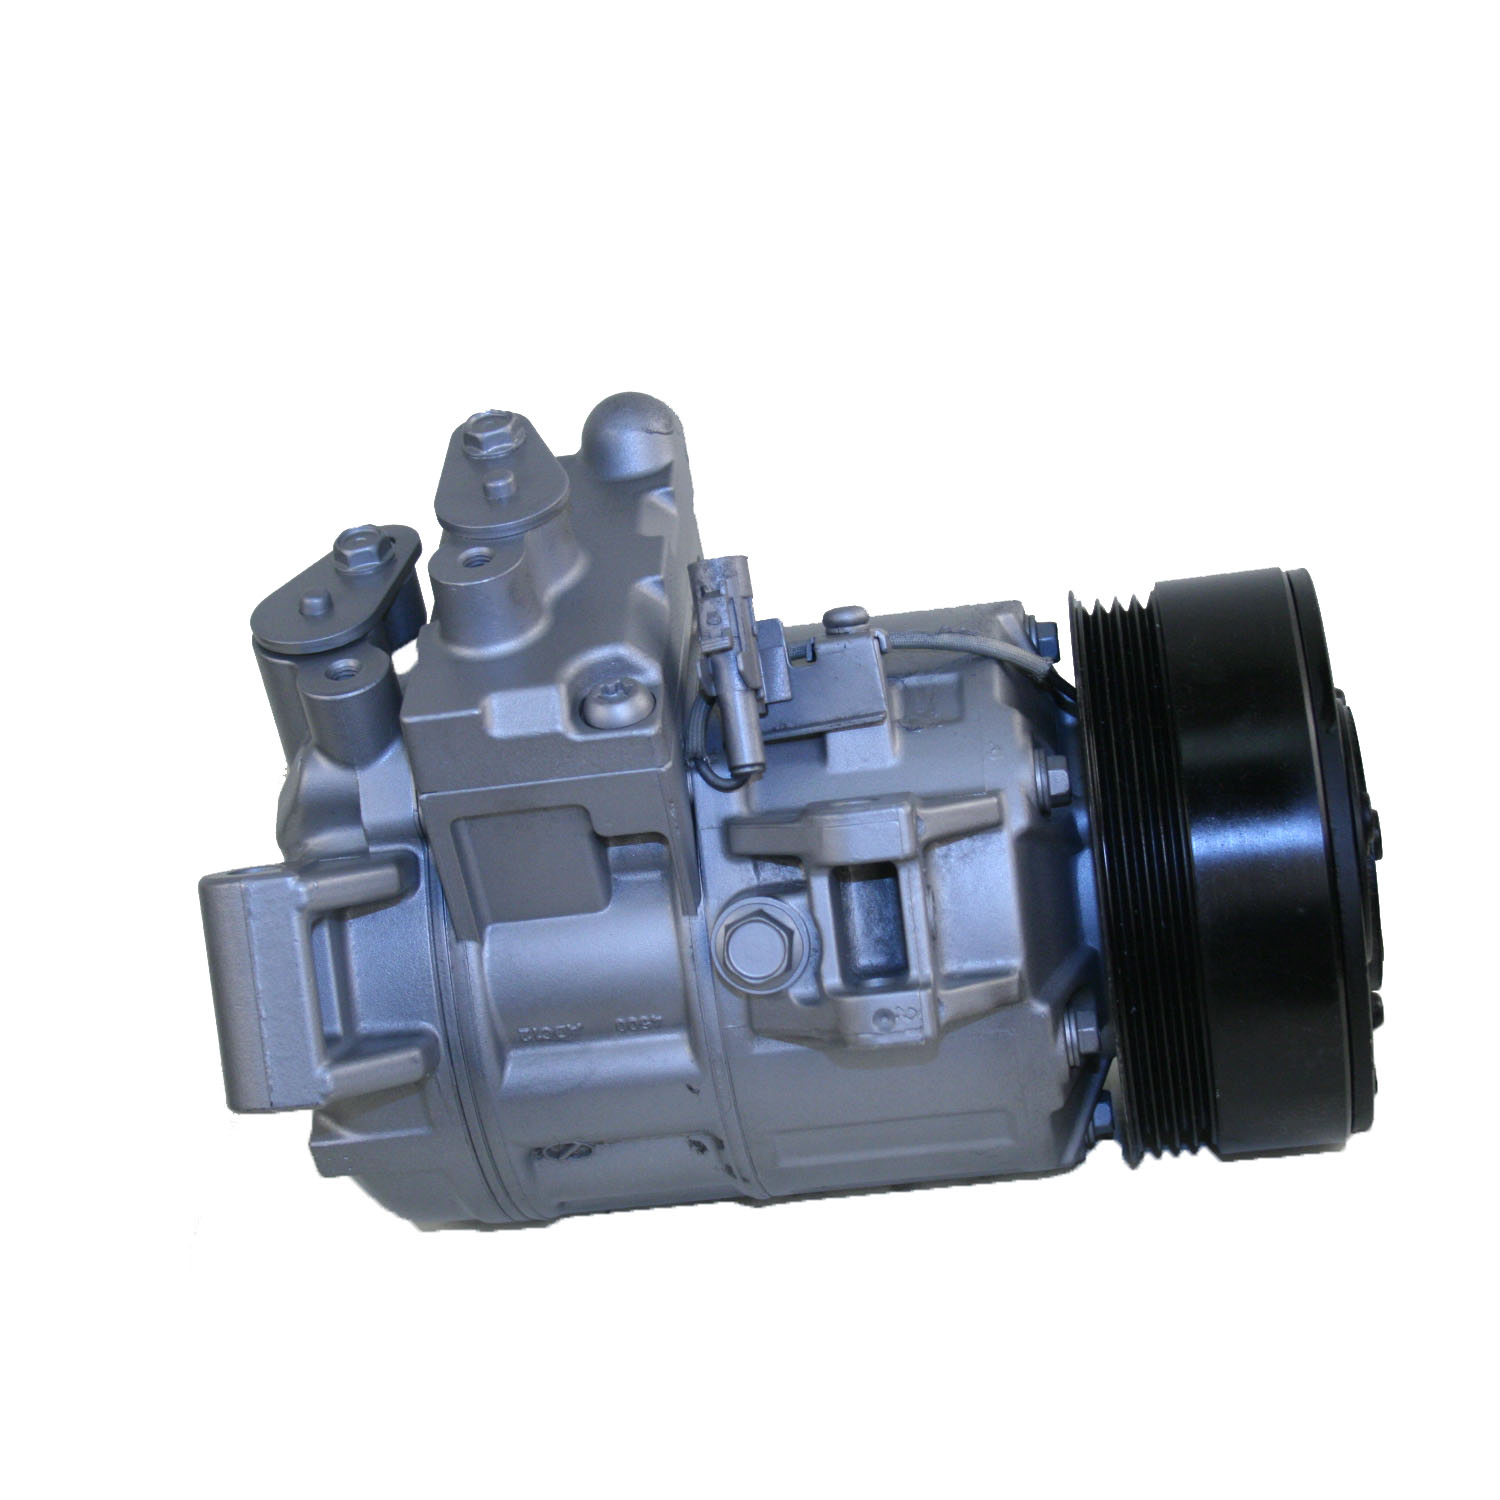 TCW Compressor 12590.4T1 Remanufactured Product Image field_60b6a13a6e67c